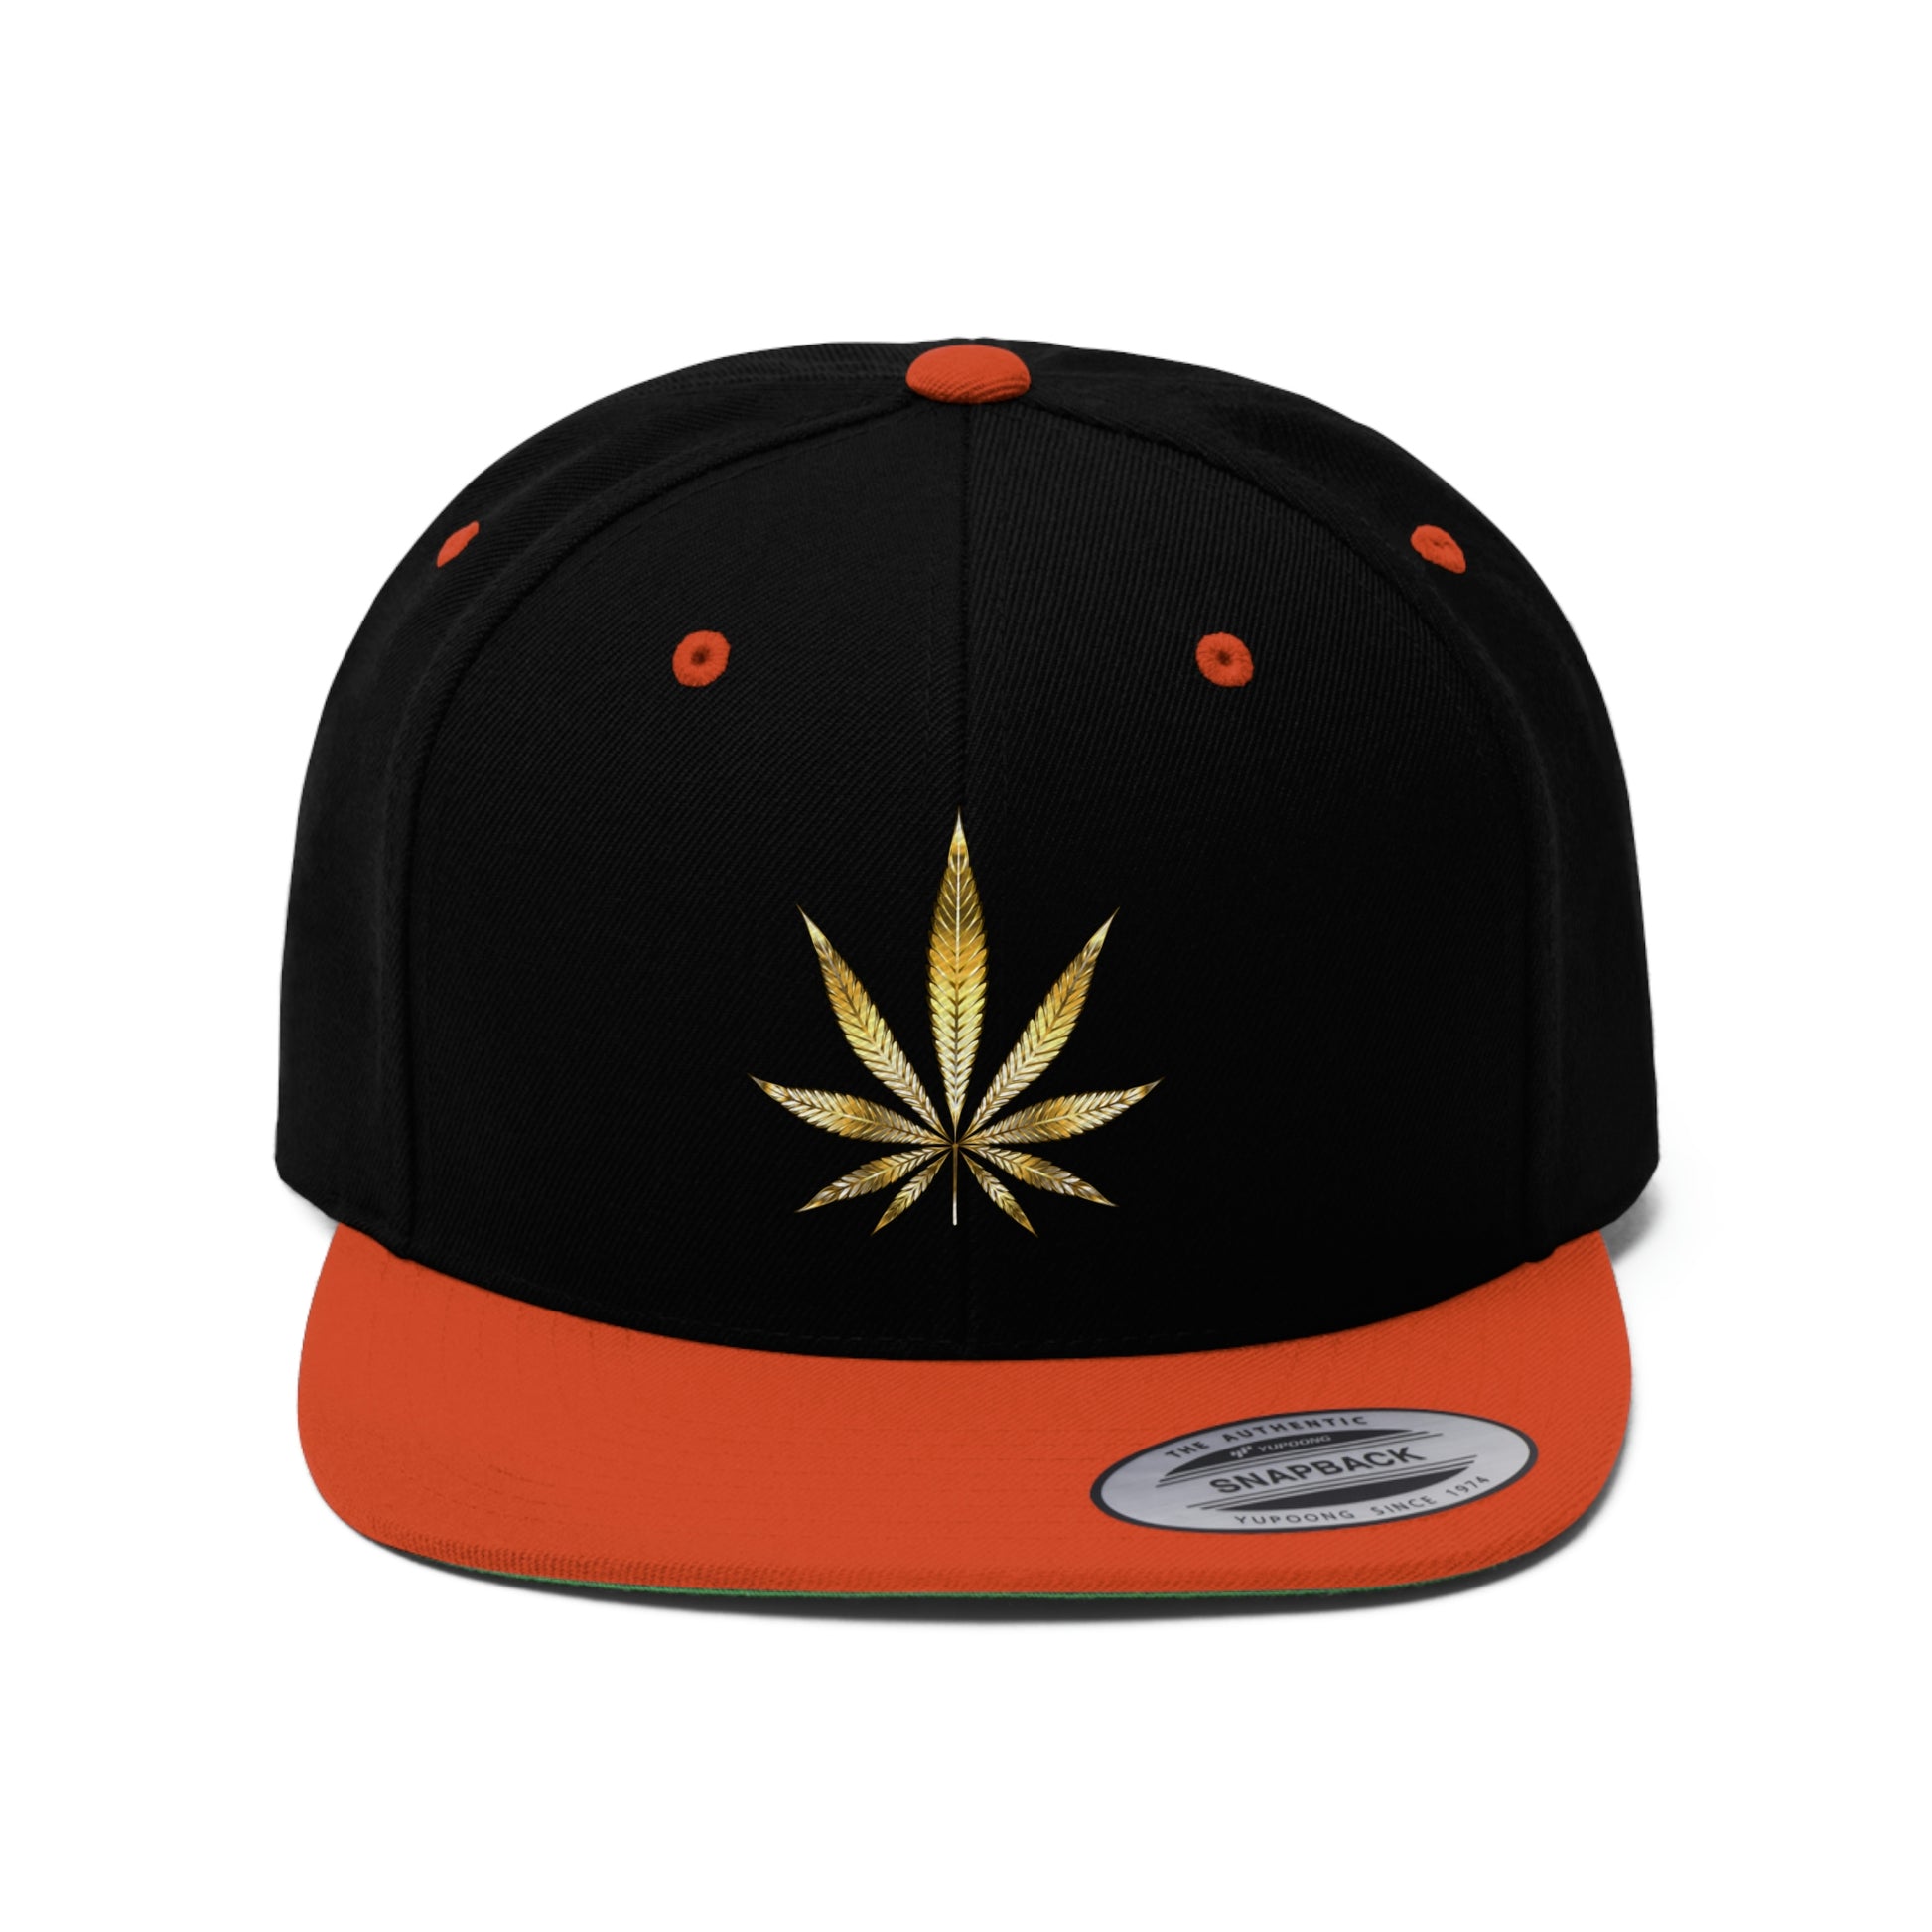 A close up of the black and orange Gold pot leaf Marijuana Hat 